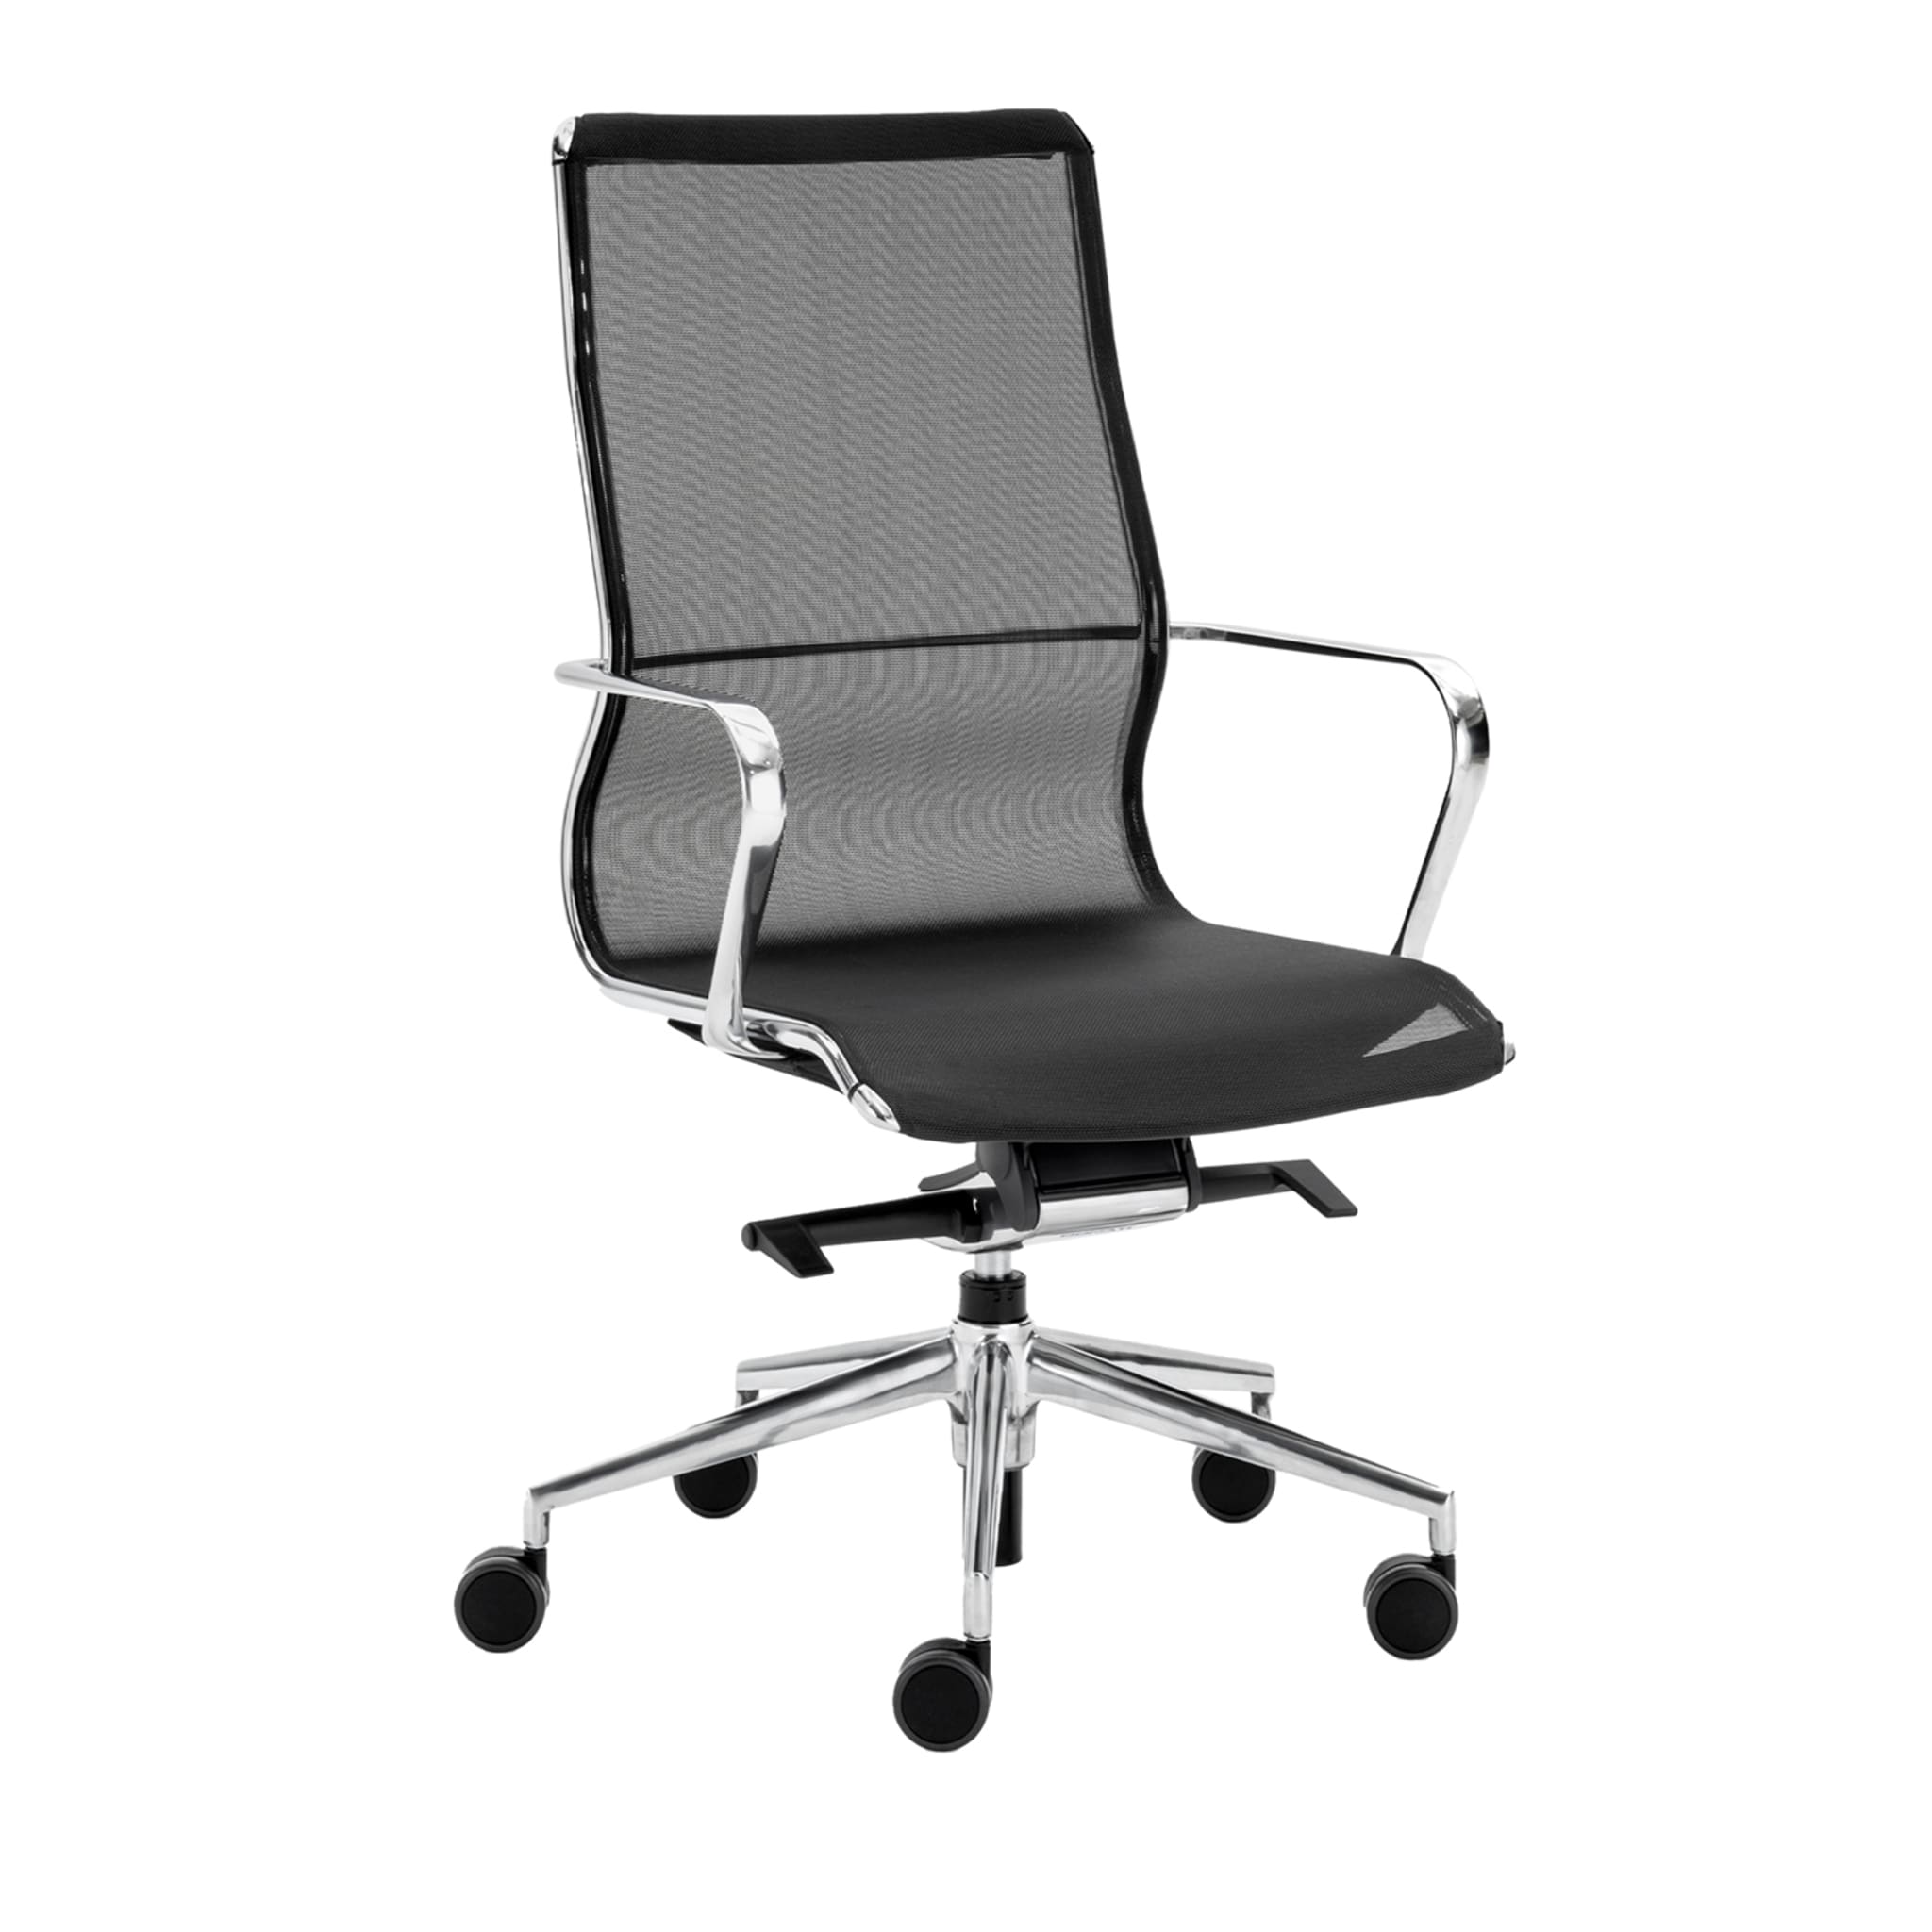 OMEGA EXECUTIVE chair - Main view